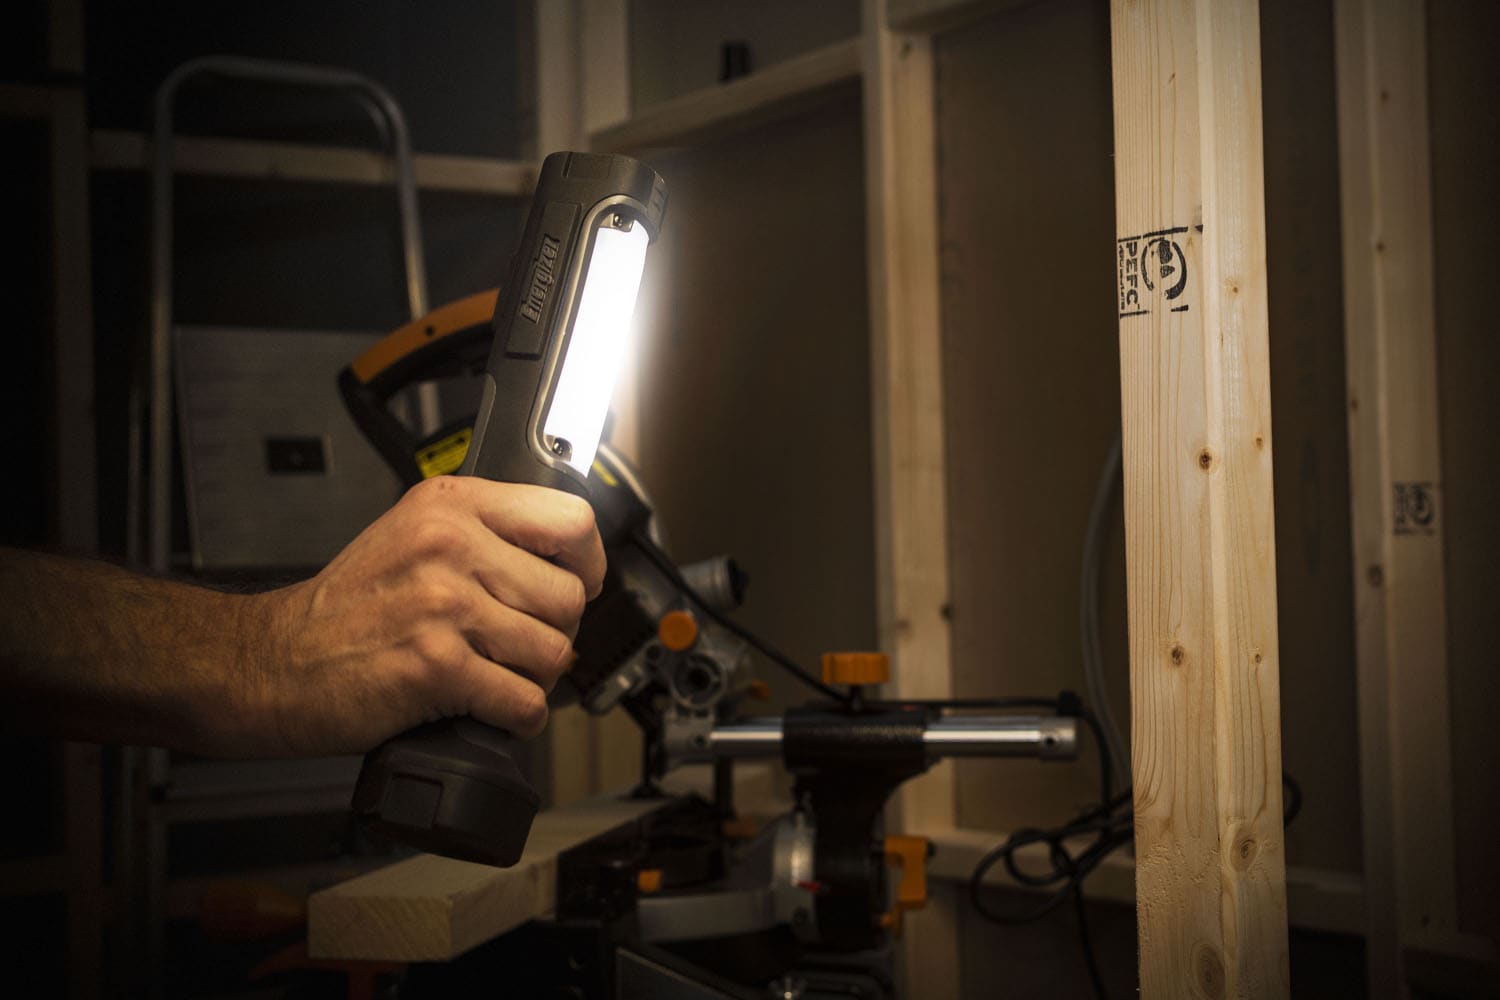 Energizer LED Taschenlampe »Hardcase Pro Worklight inkl. 4 AA Batterien«,  (Packung, 5 St.) jetzt bestellen